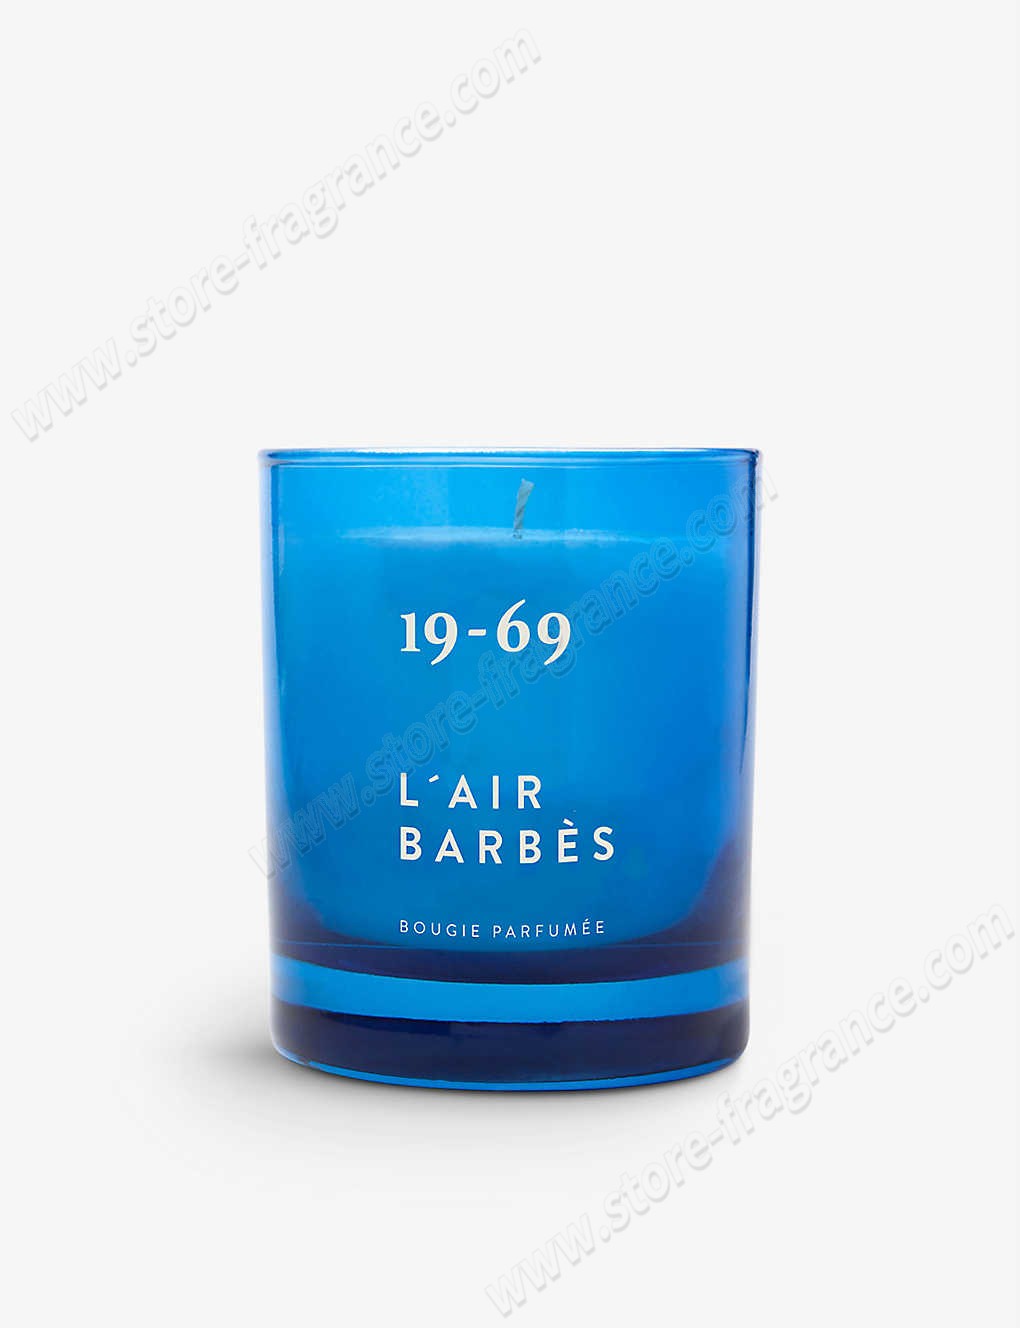 19-69/L'air Barbès vegetable-wax candle 200ml ✿ Discount Store - 19-69/L'air Barbès vegetable-wax candle 200ml ✿ Discount Store